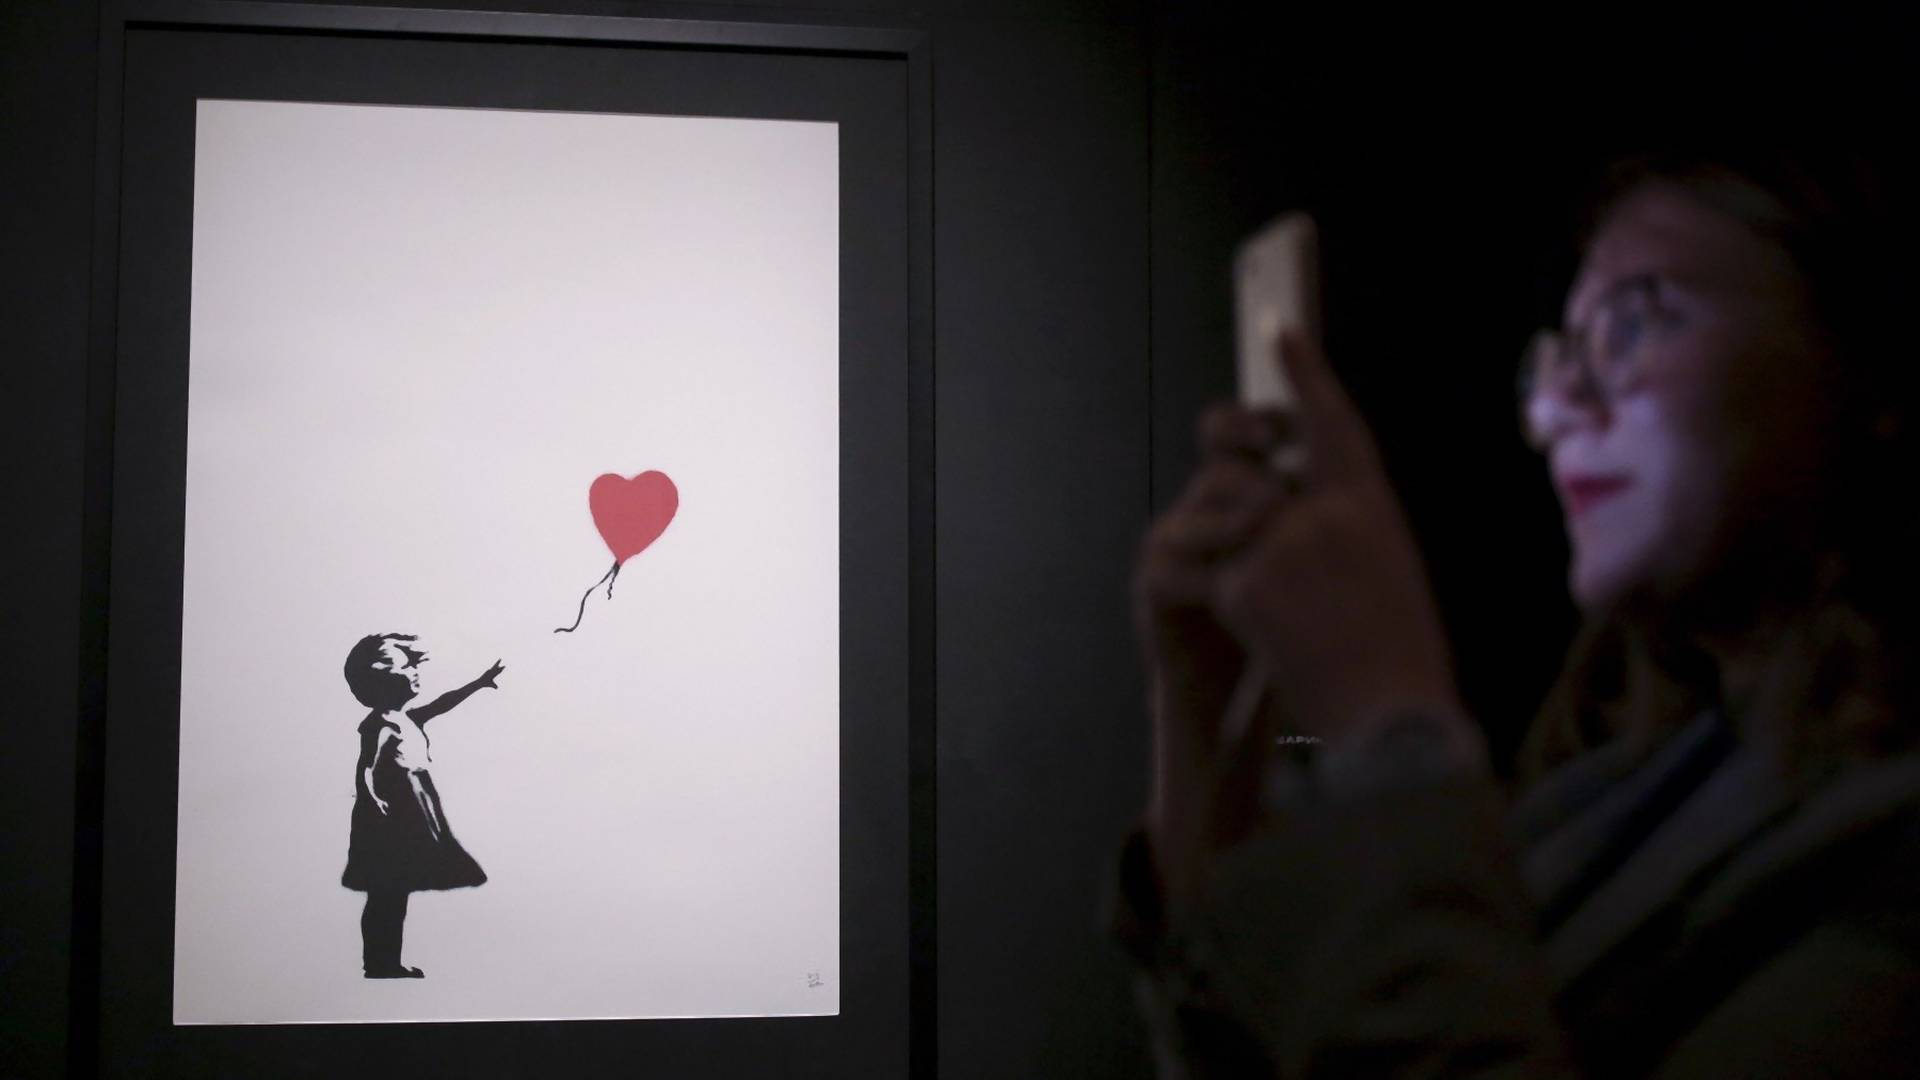 Benksijeva čuvena slika se "samouništila" nakon što je prodata za 1,4 miliona dolara